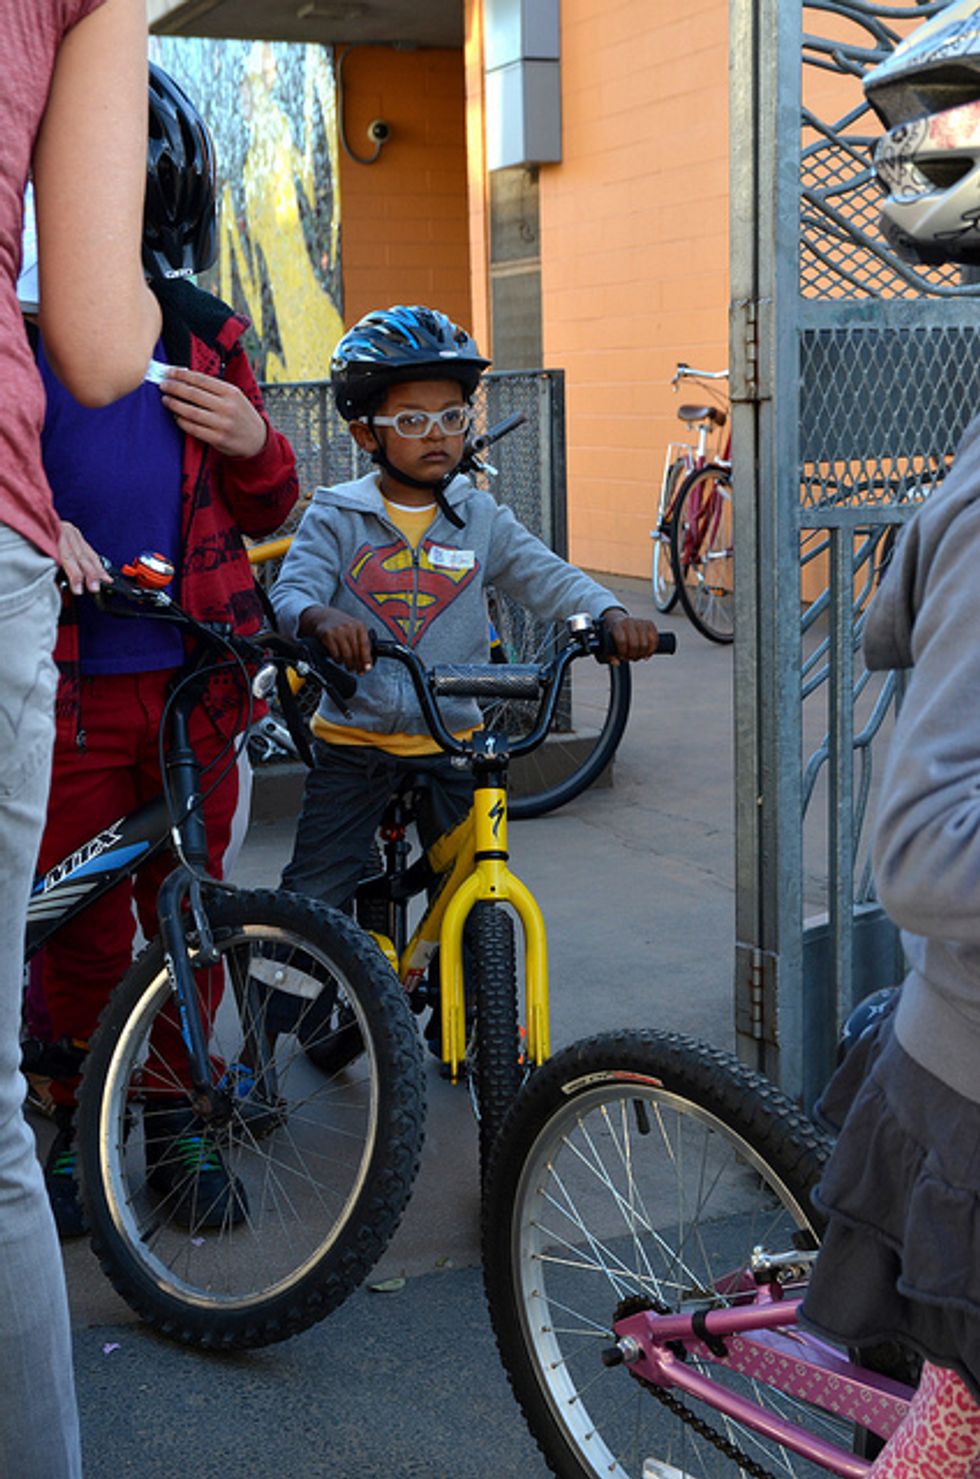 Kids on Bikes! It's San Francisco Bike to School Week